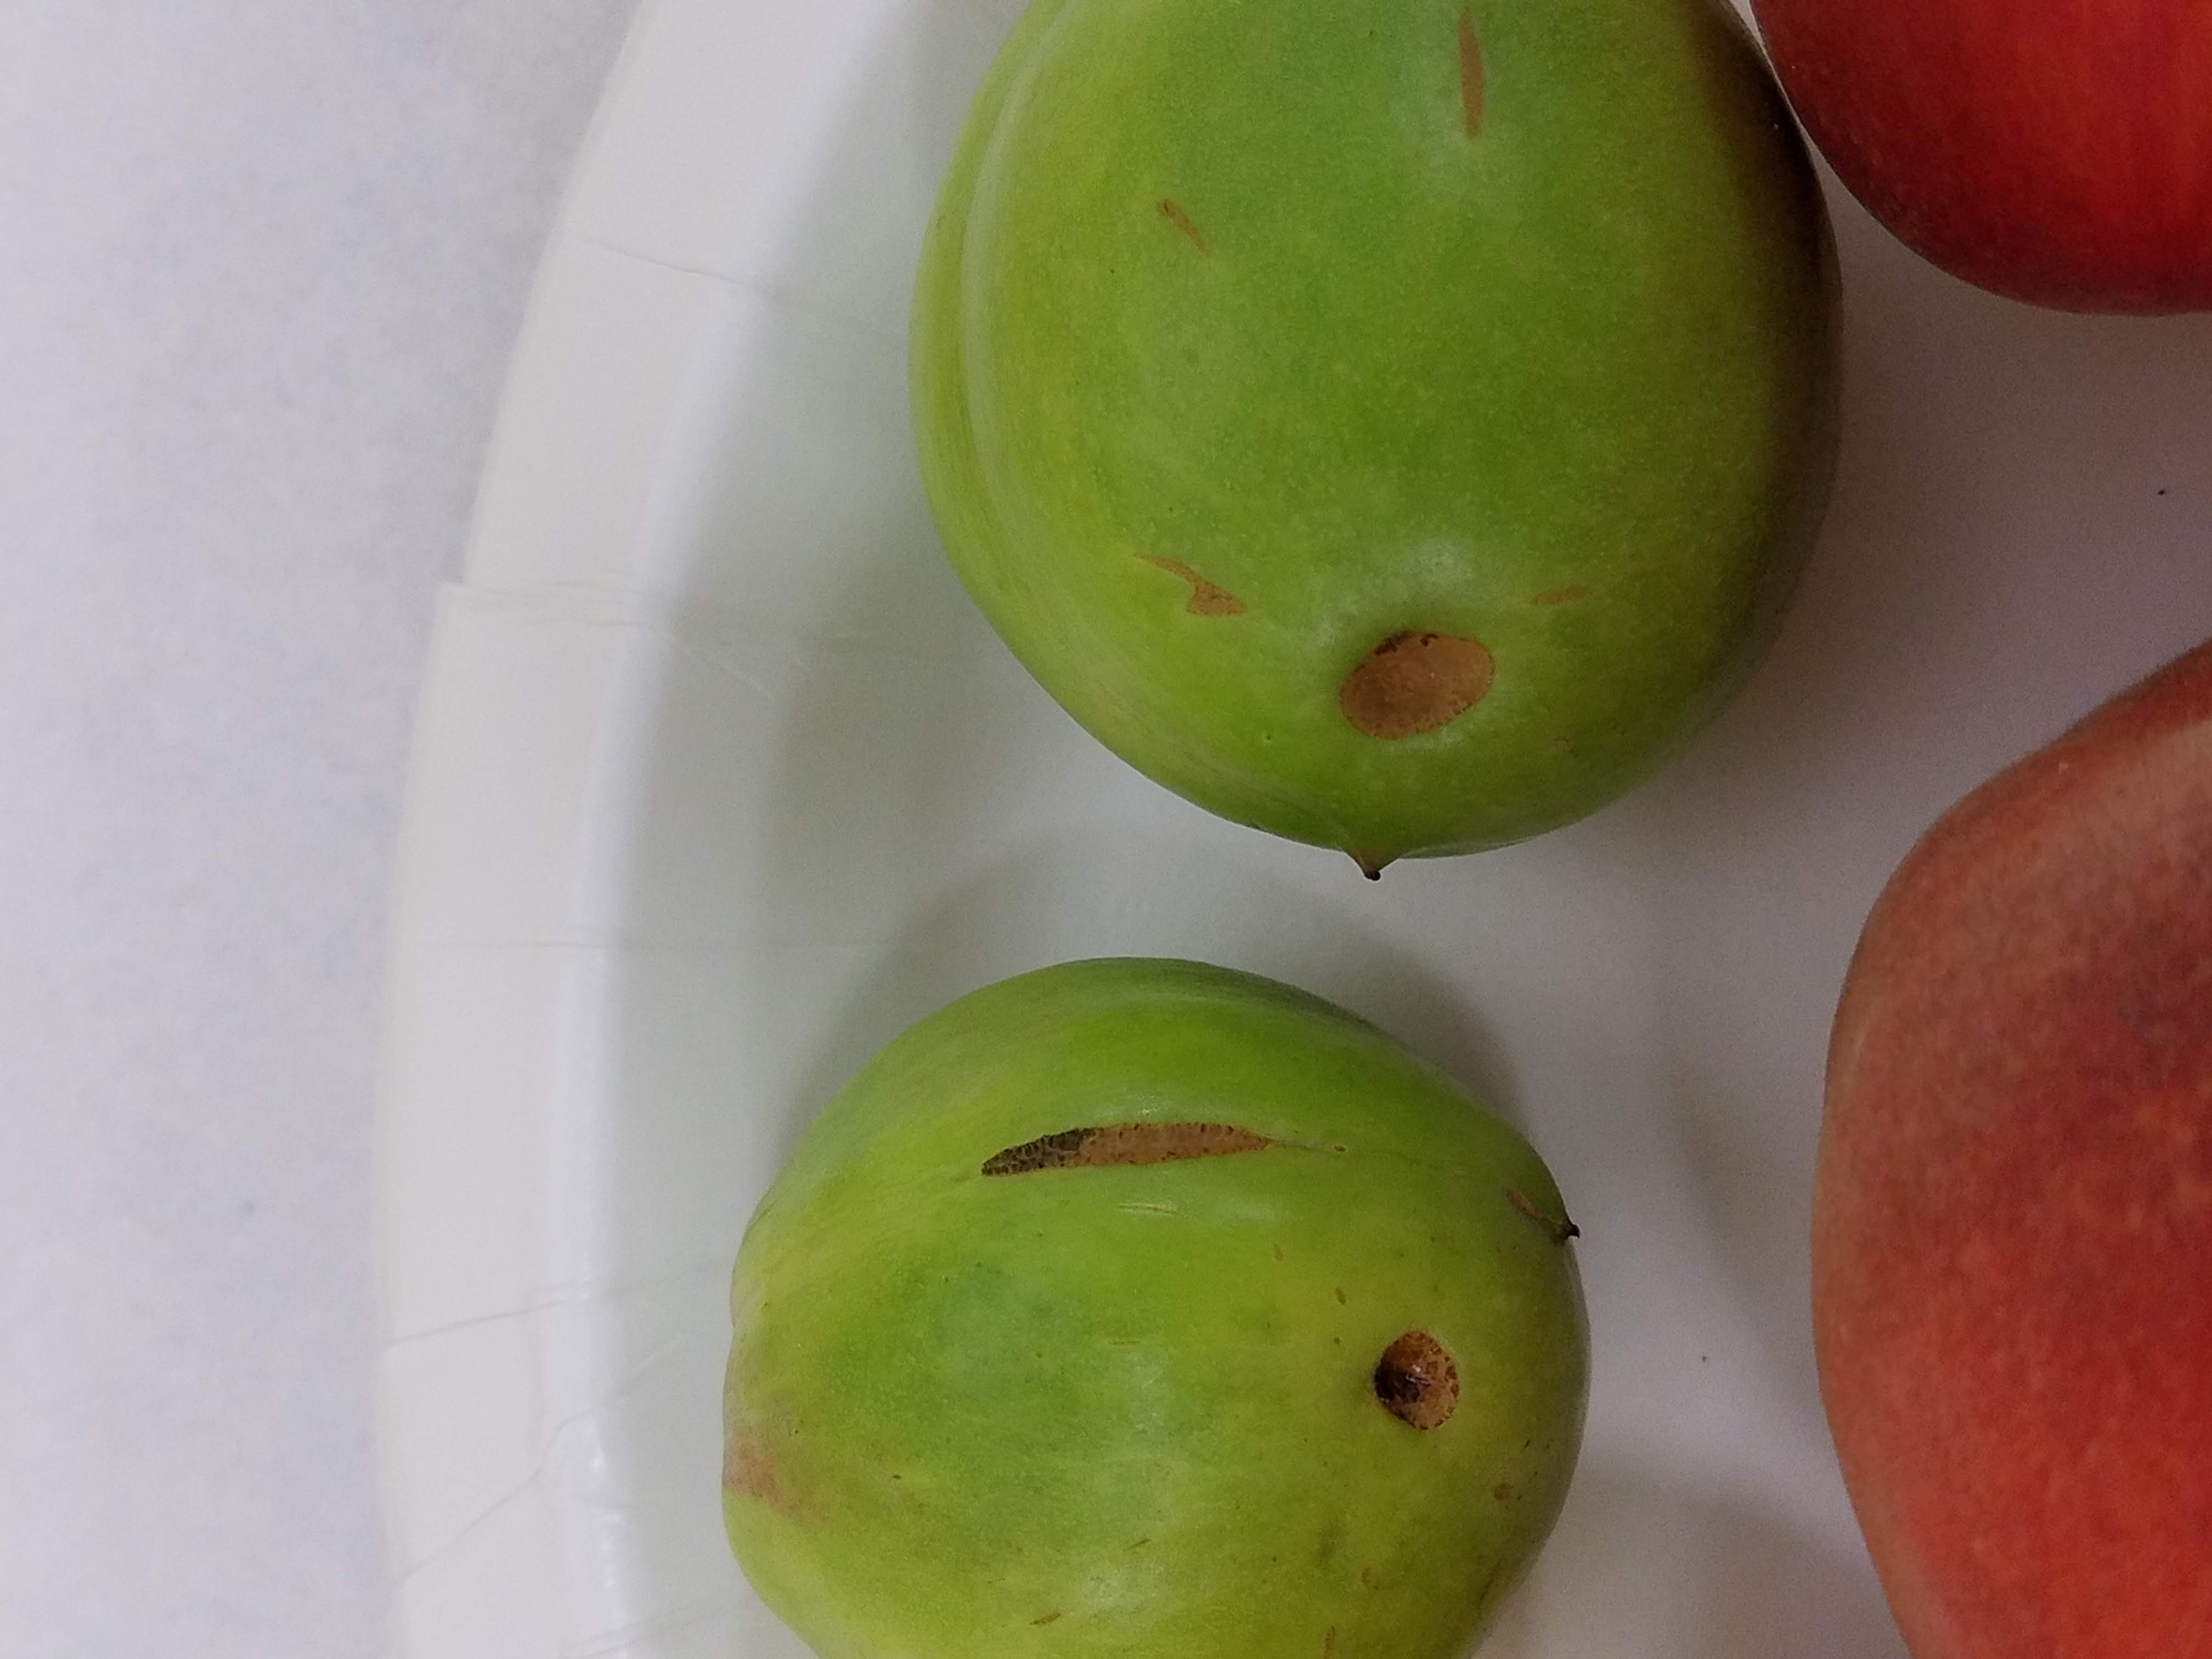 pc damage on green fruit